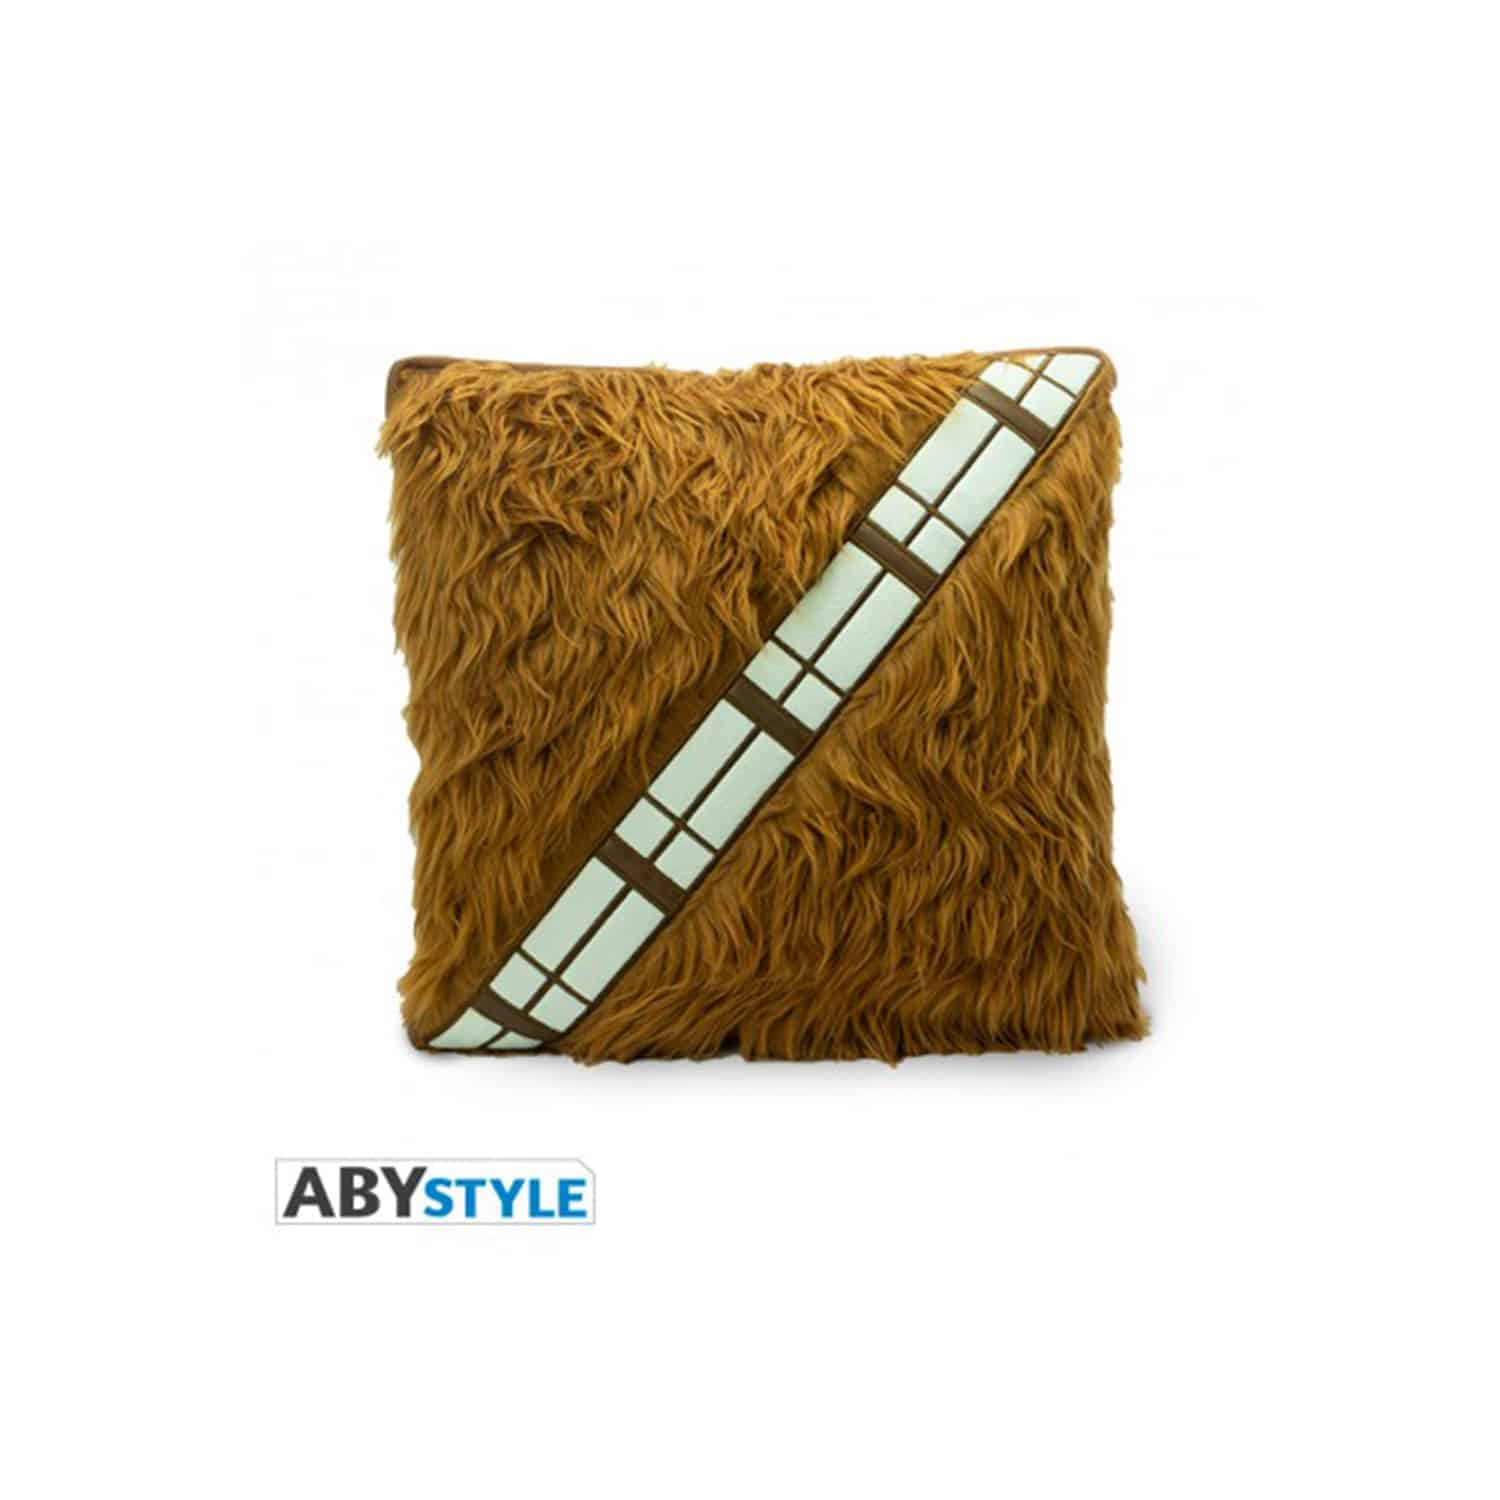 star-wars-chewbacca-cushion